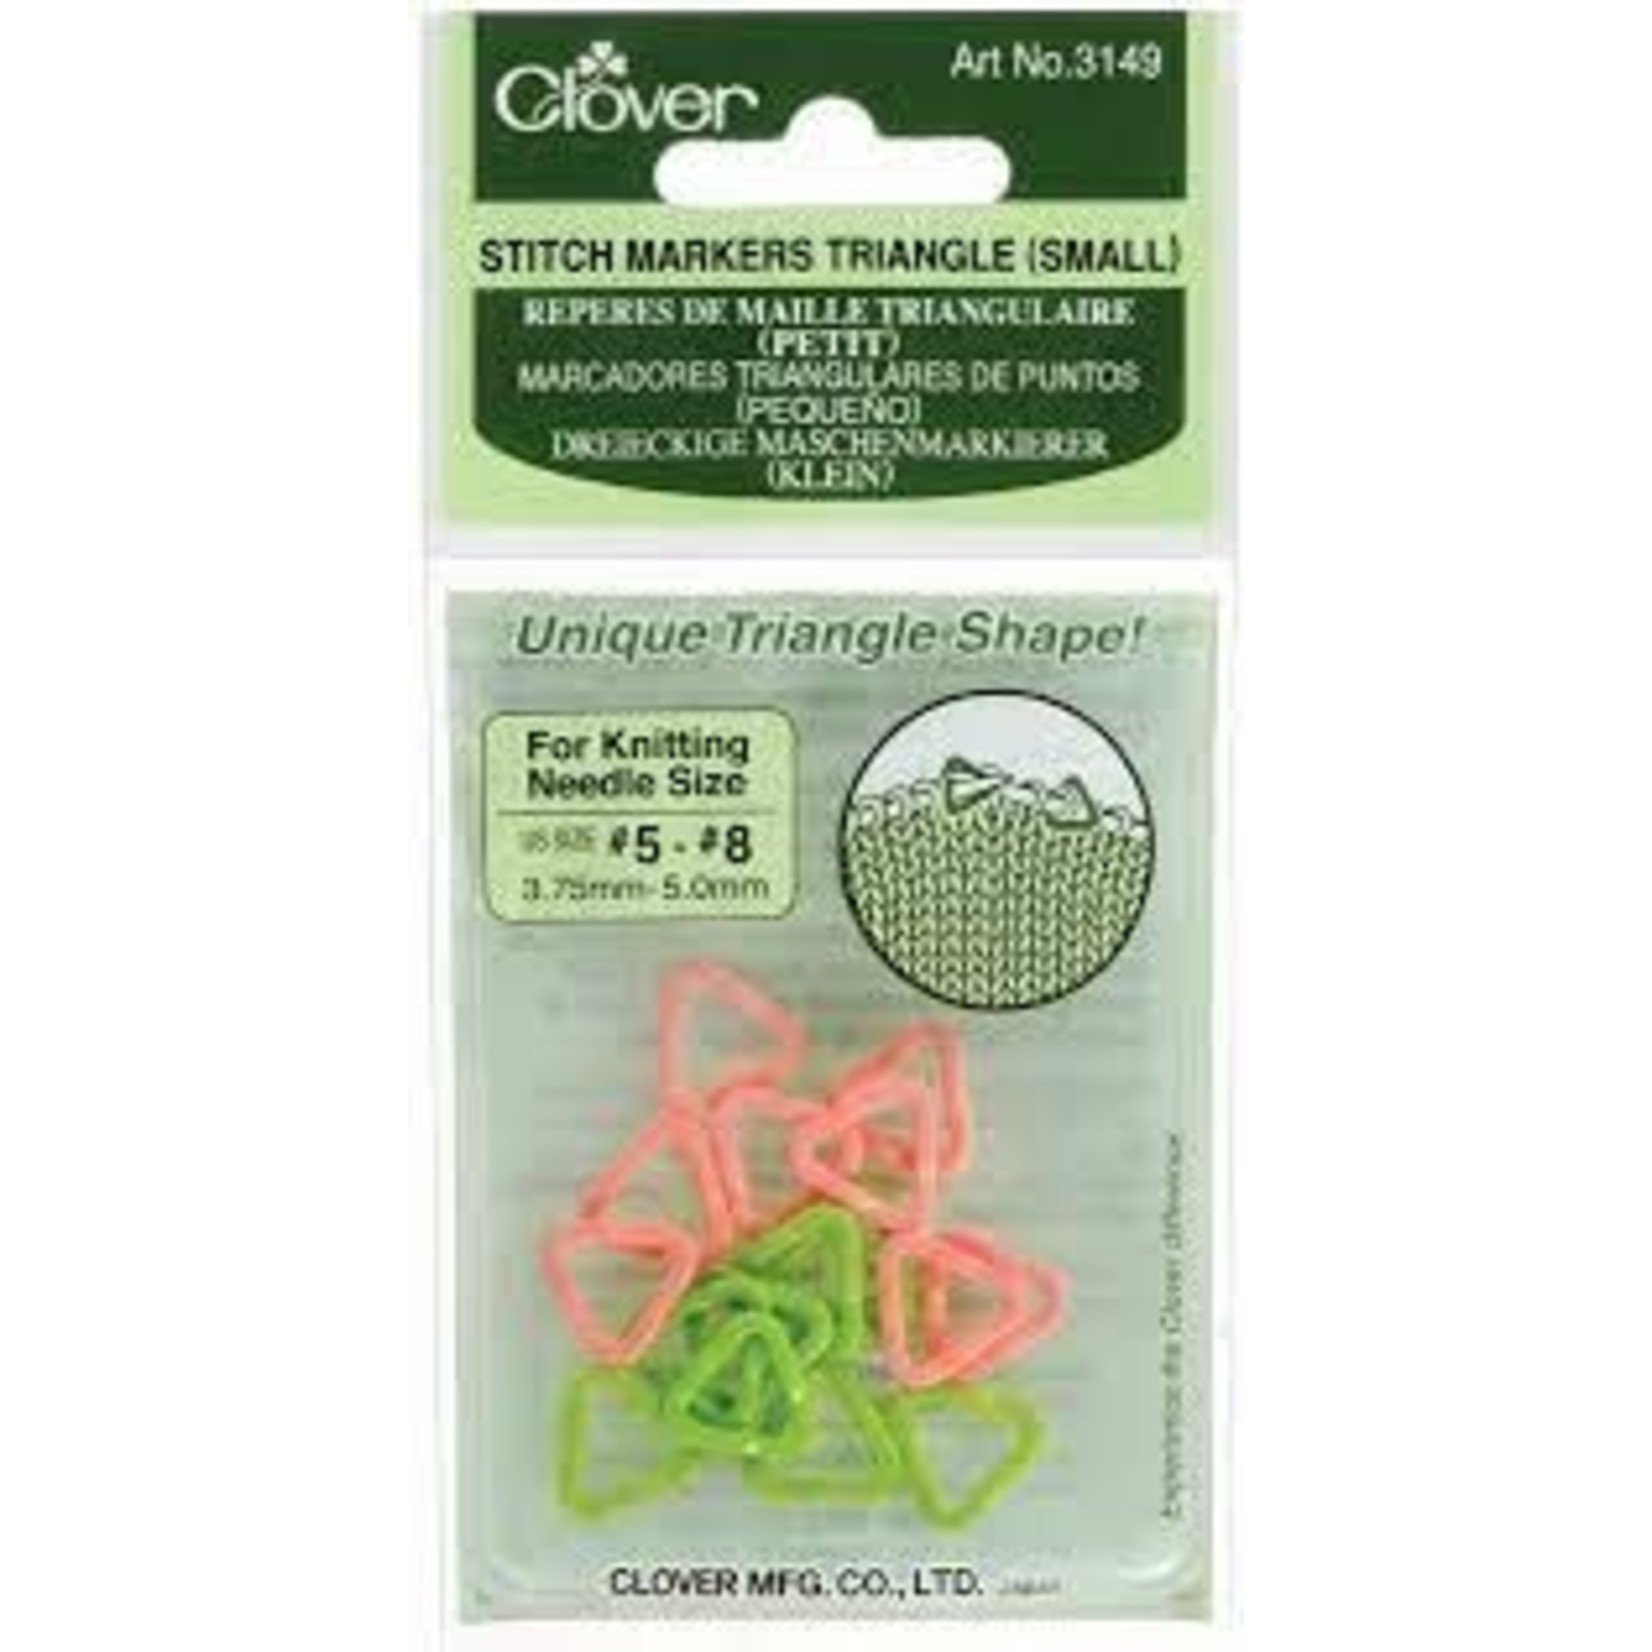 Clover Small Triangle Stitch Markers (3149)